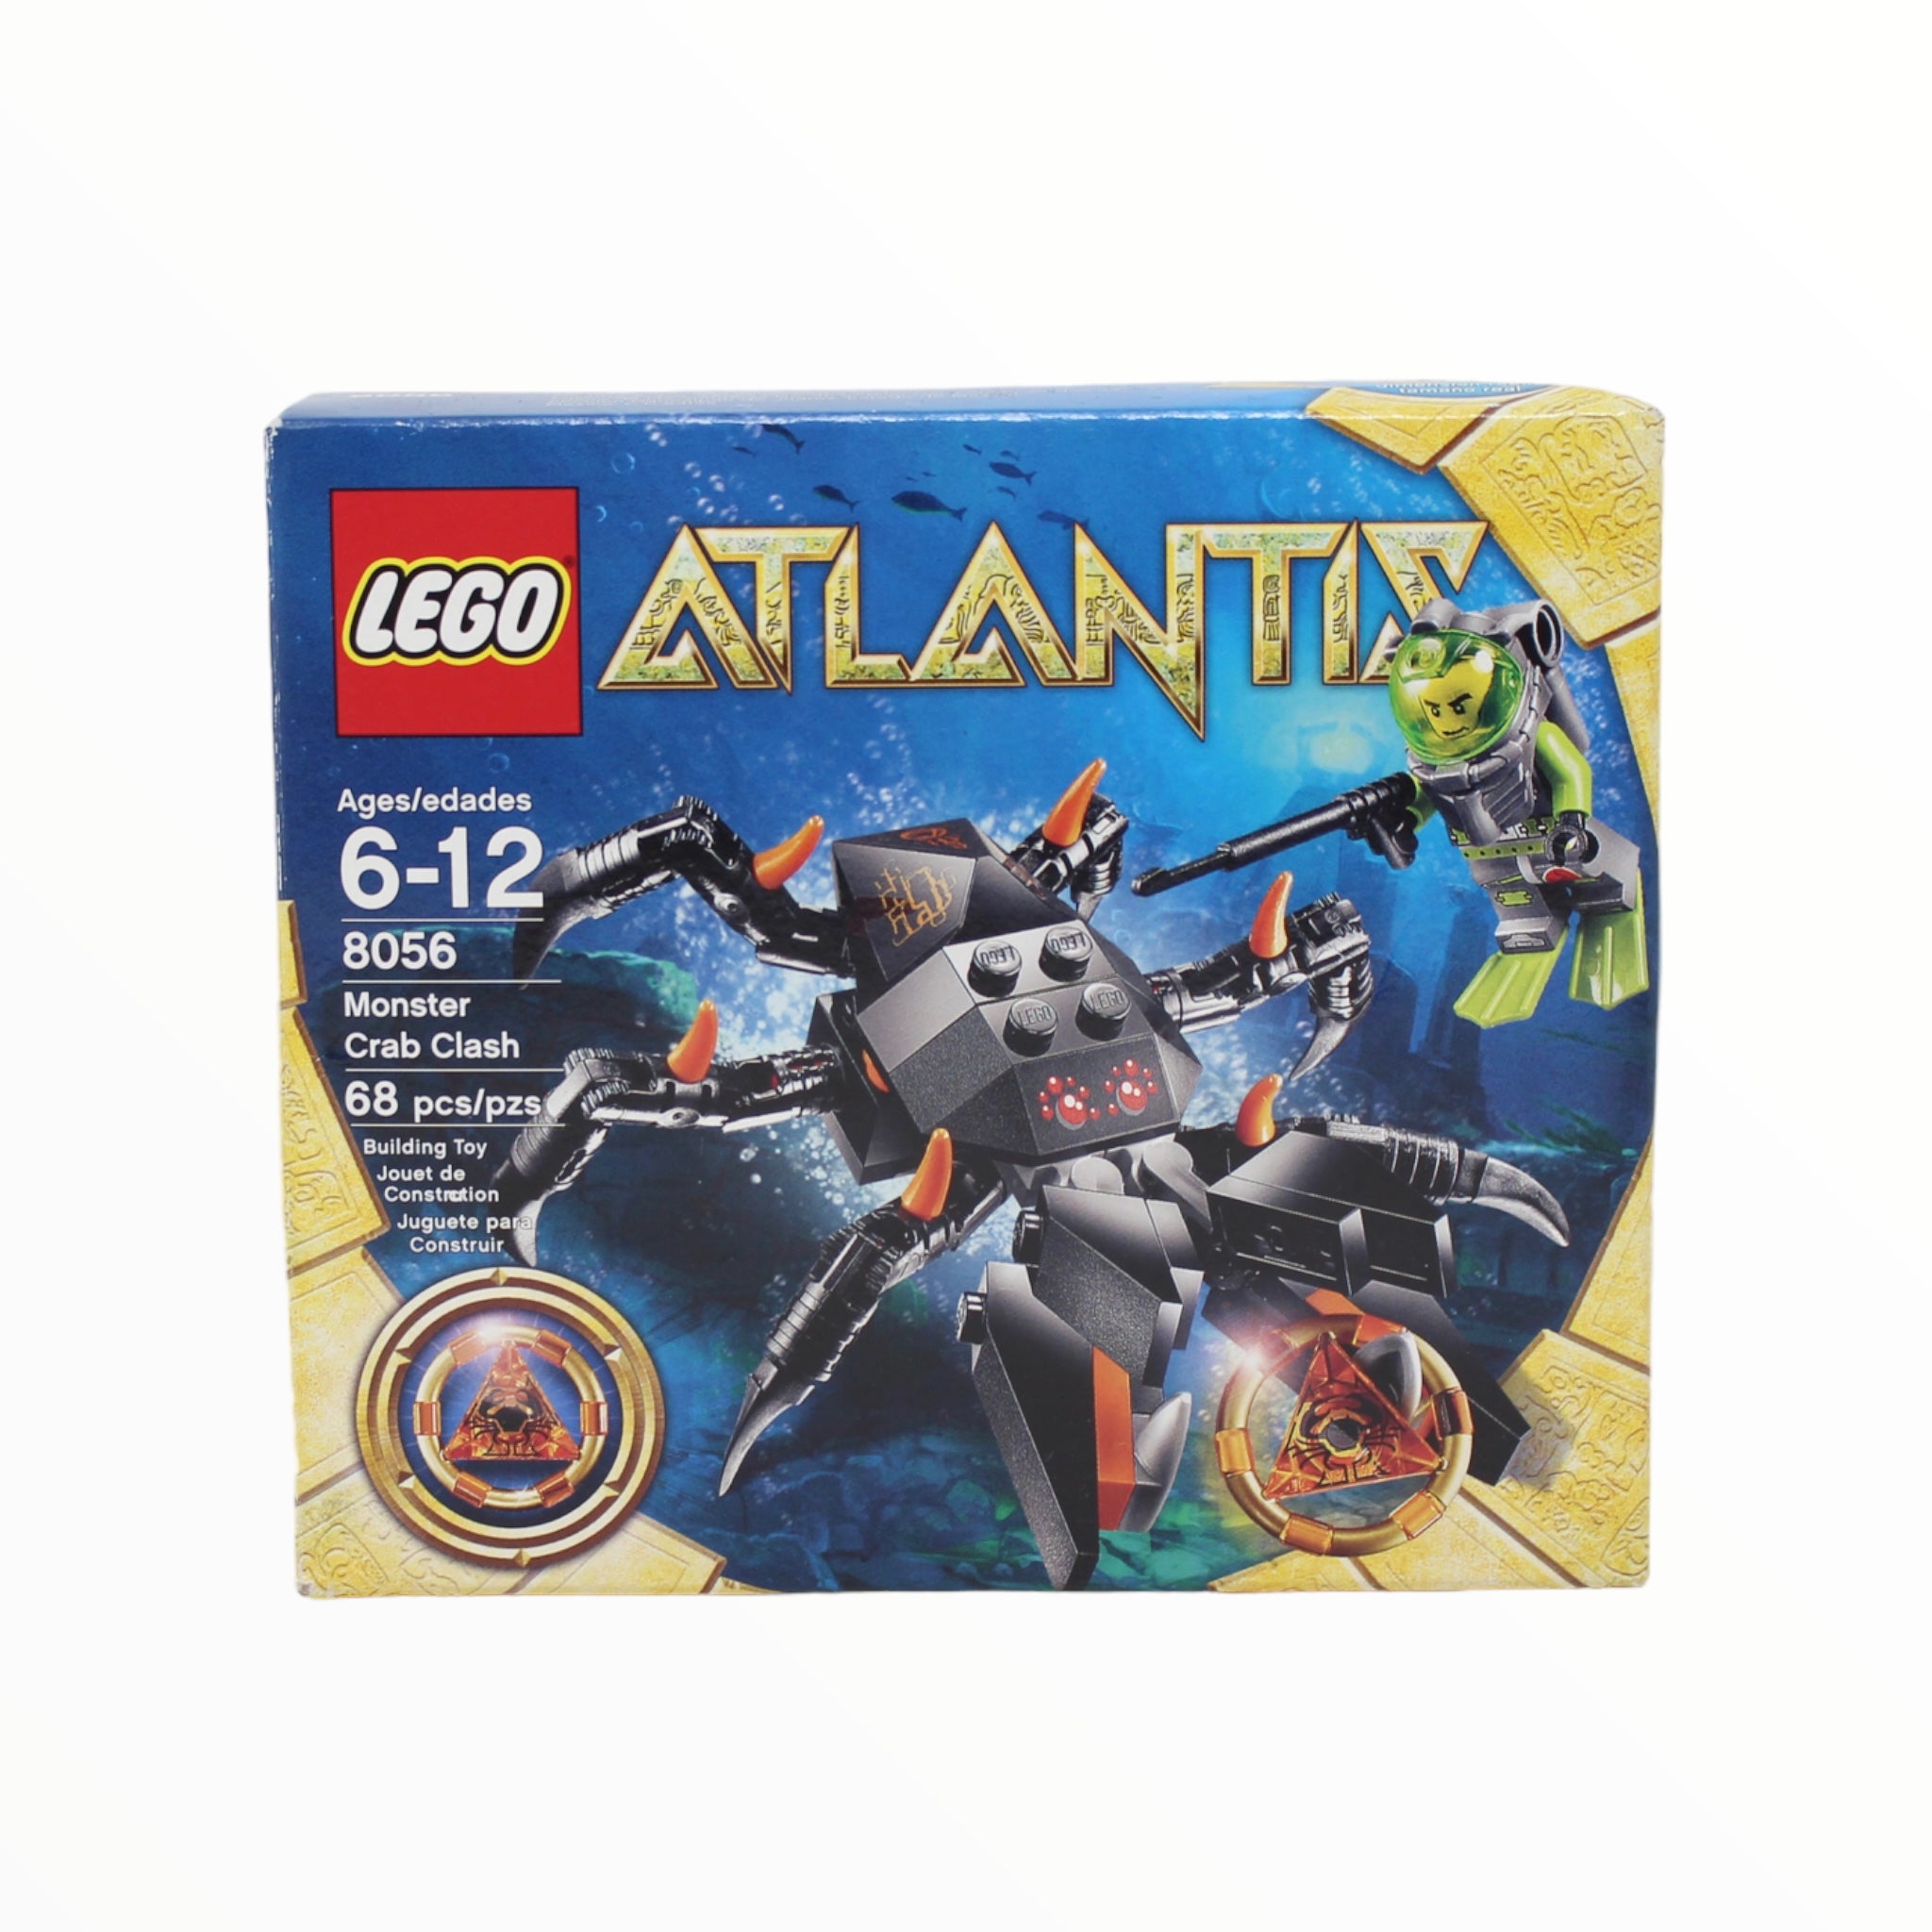 Certified Used Set 8056 Atlantis Monster Crab Clash